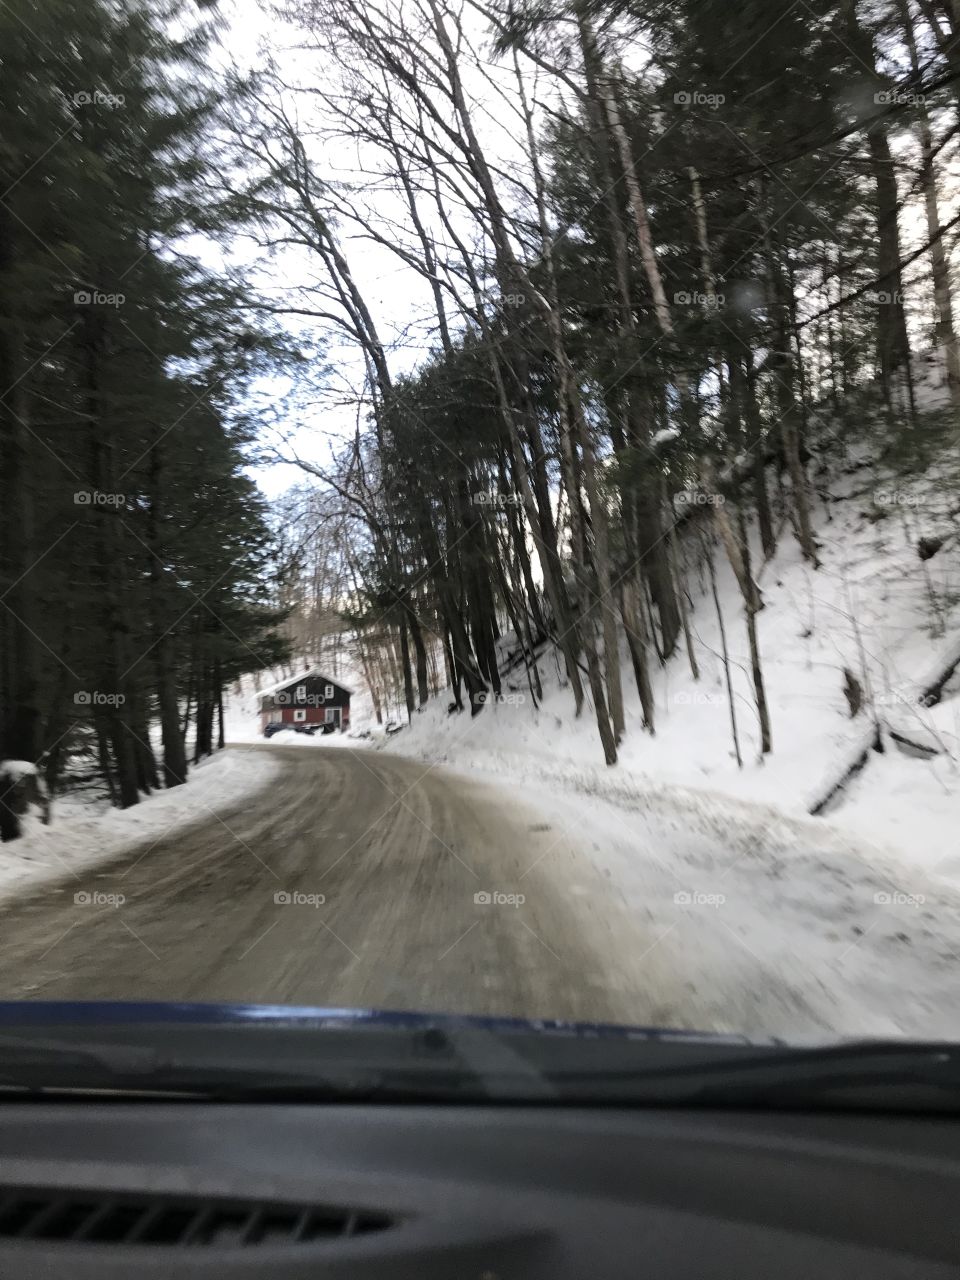 Winter drives